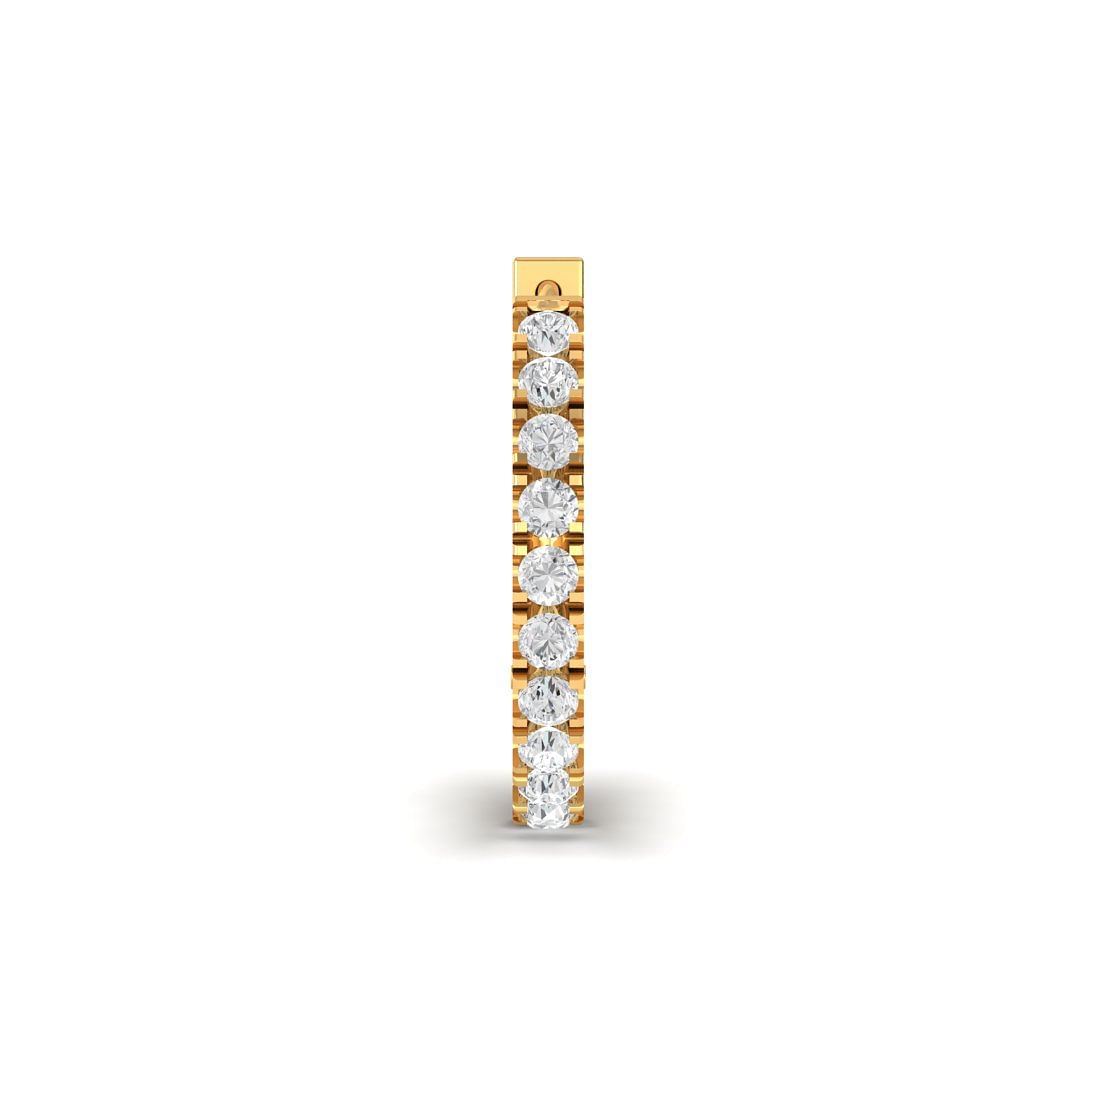 18k Yellow Gold Circle Diamond Stud Earrings for wedding